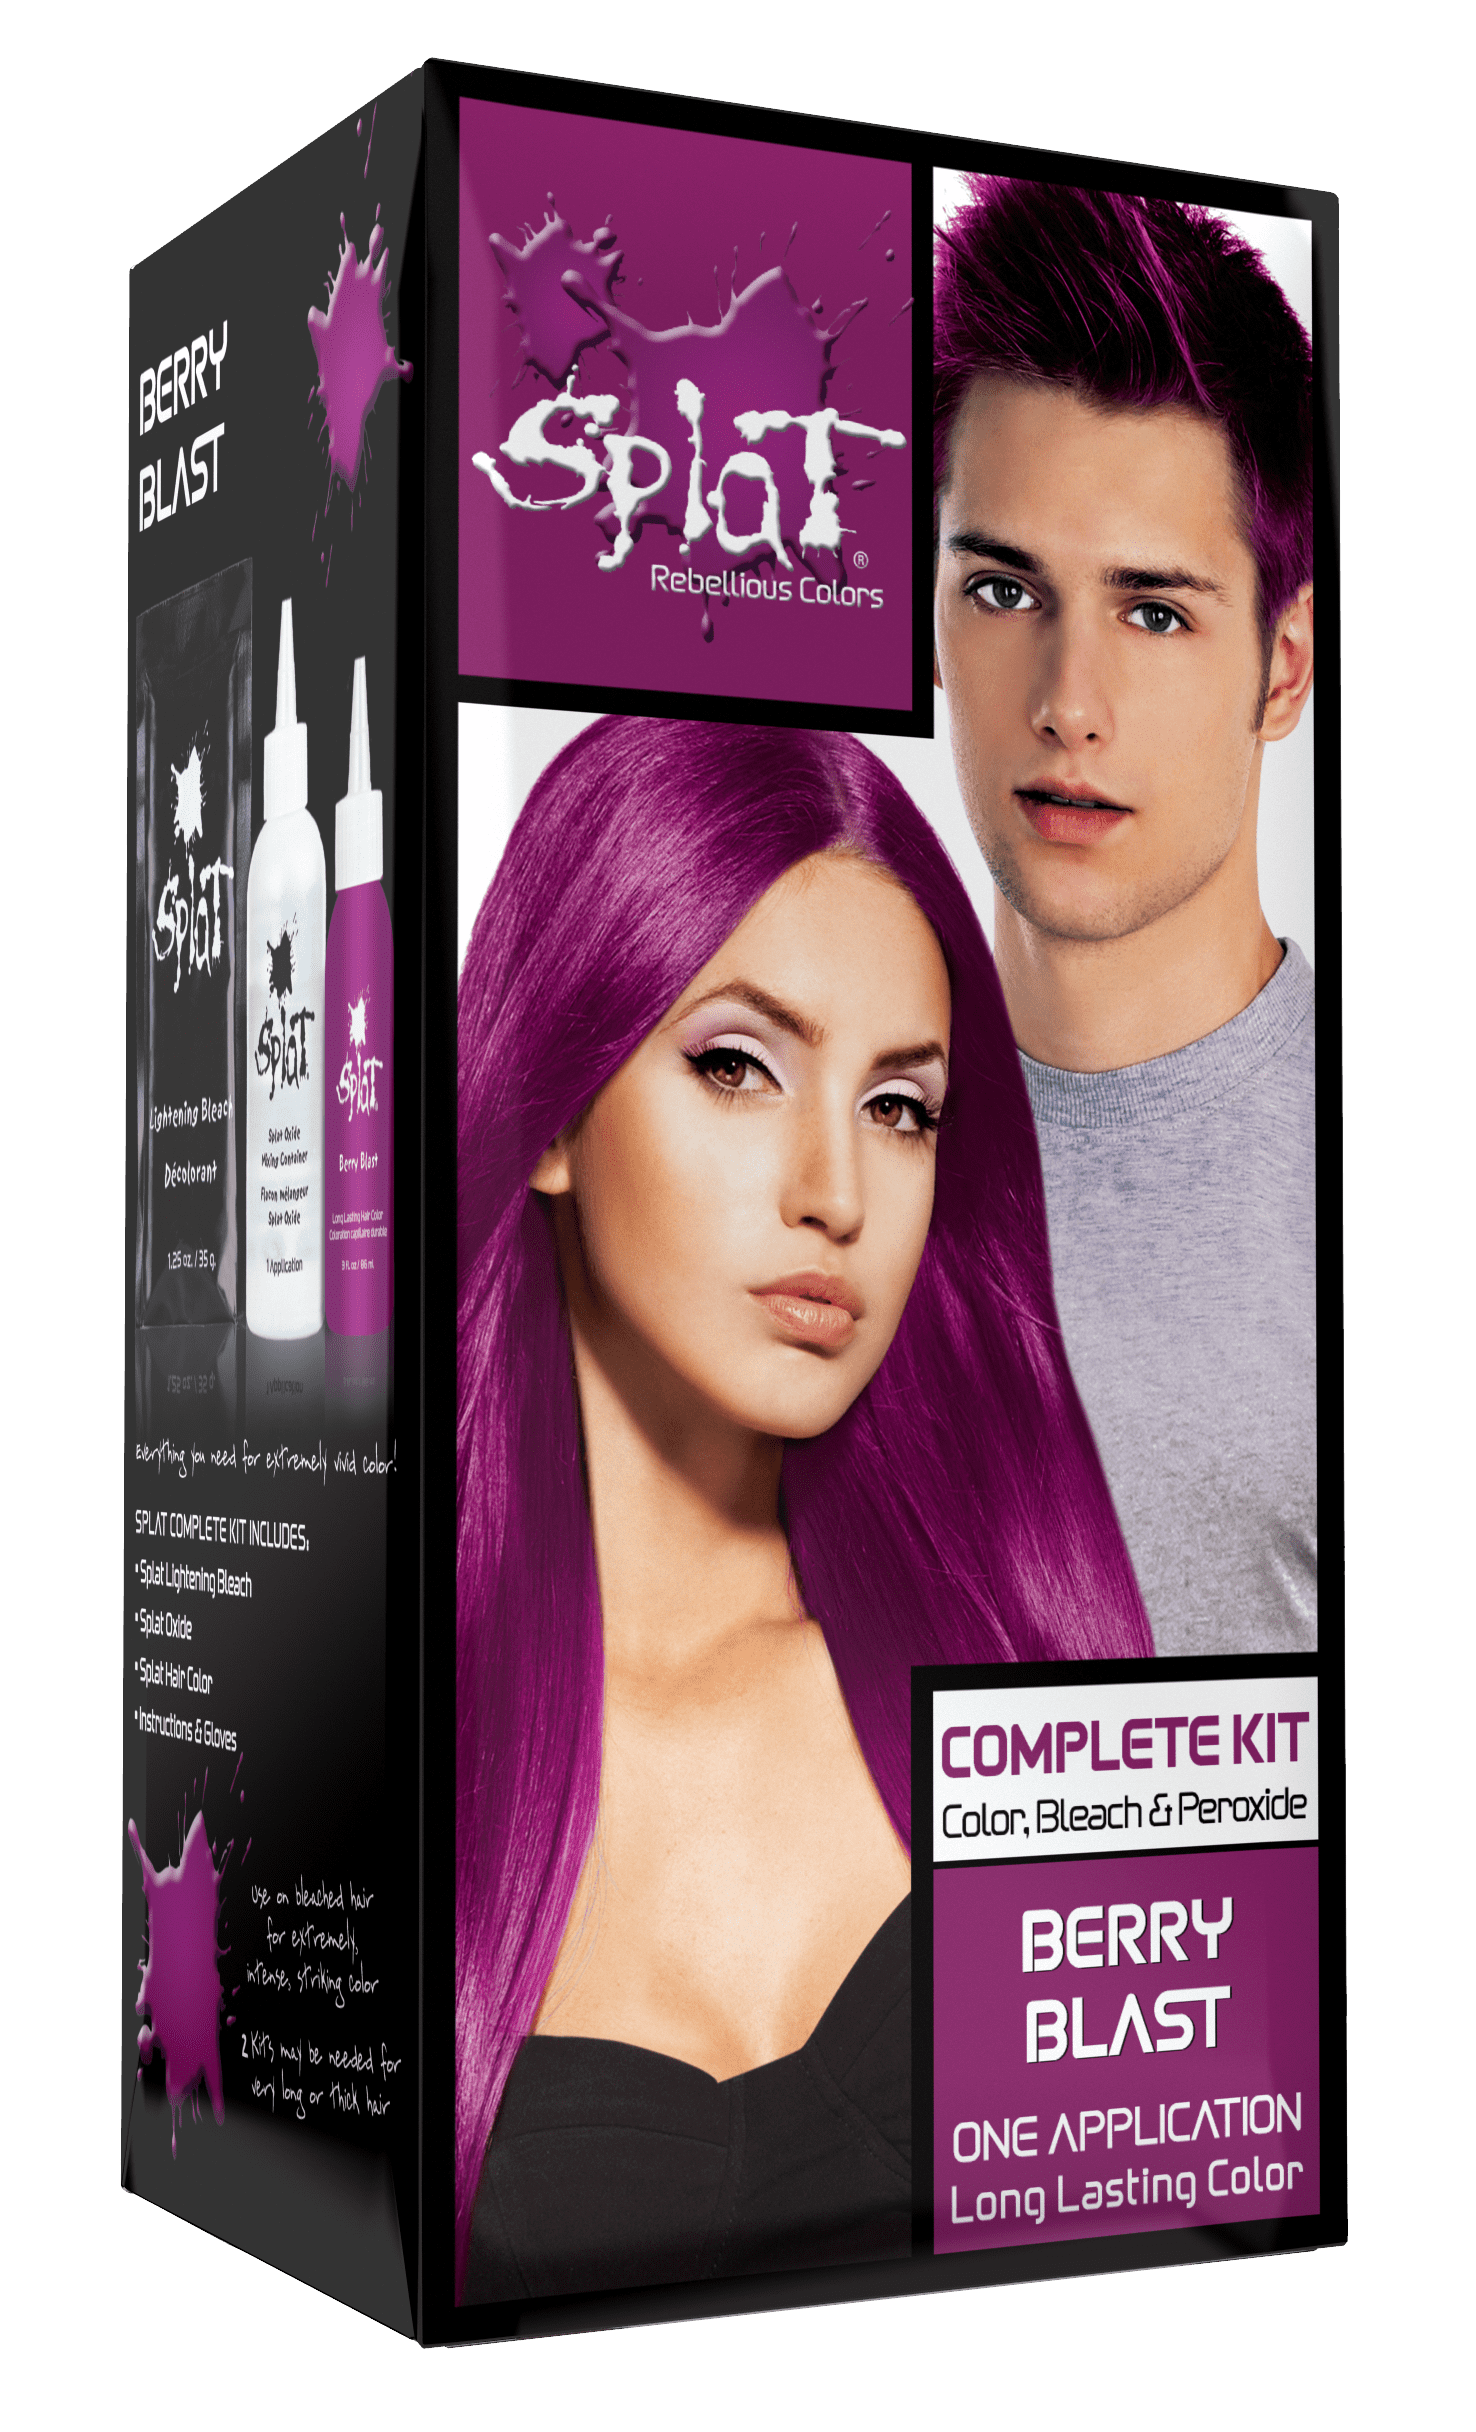 Splat Berry Blast Hair Color Kit, Semi-Permanent Magenta Pink Dye -  